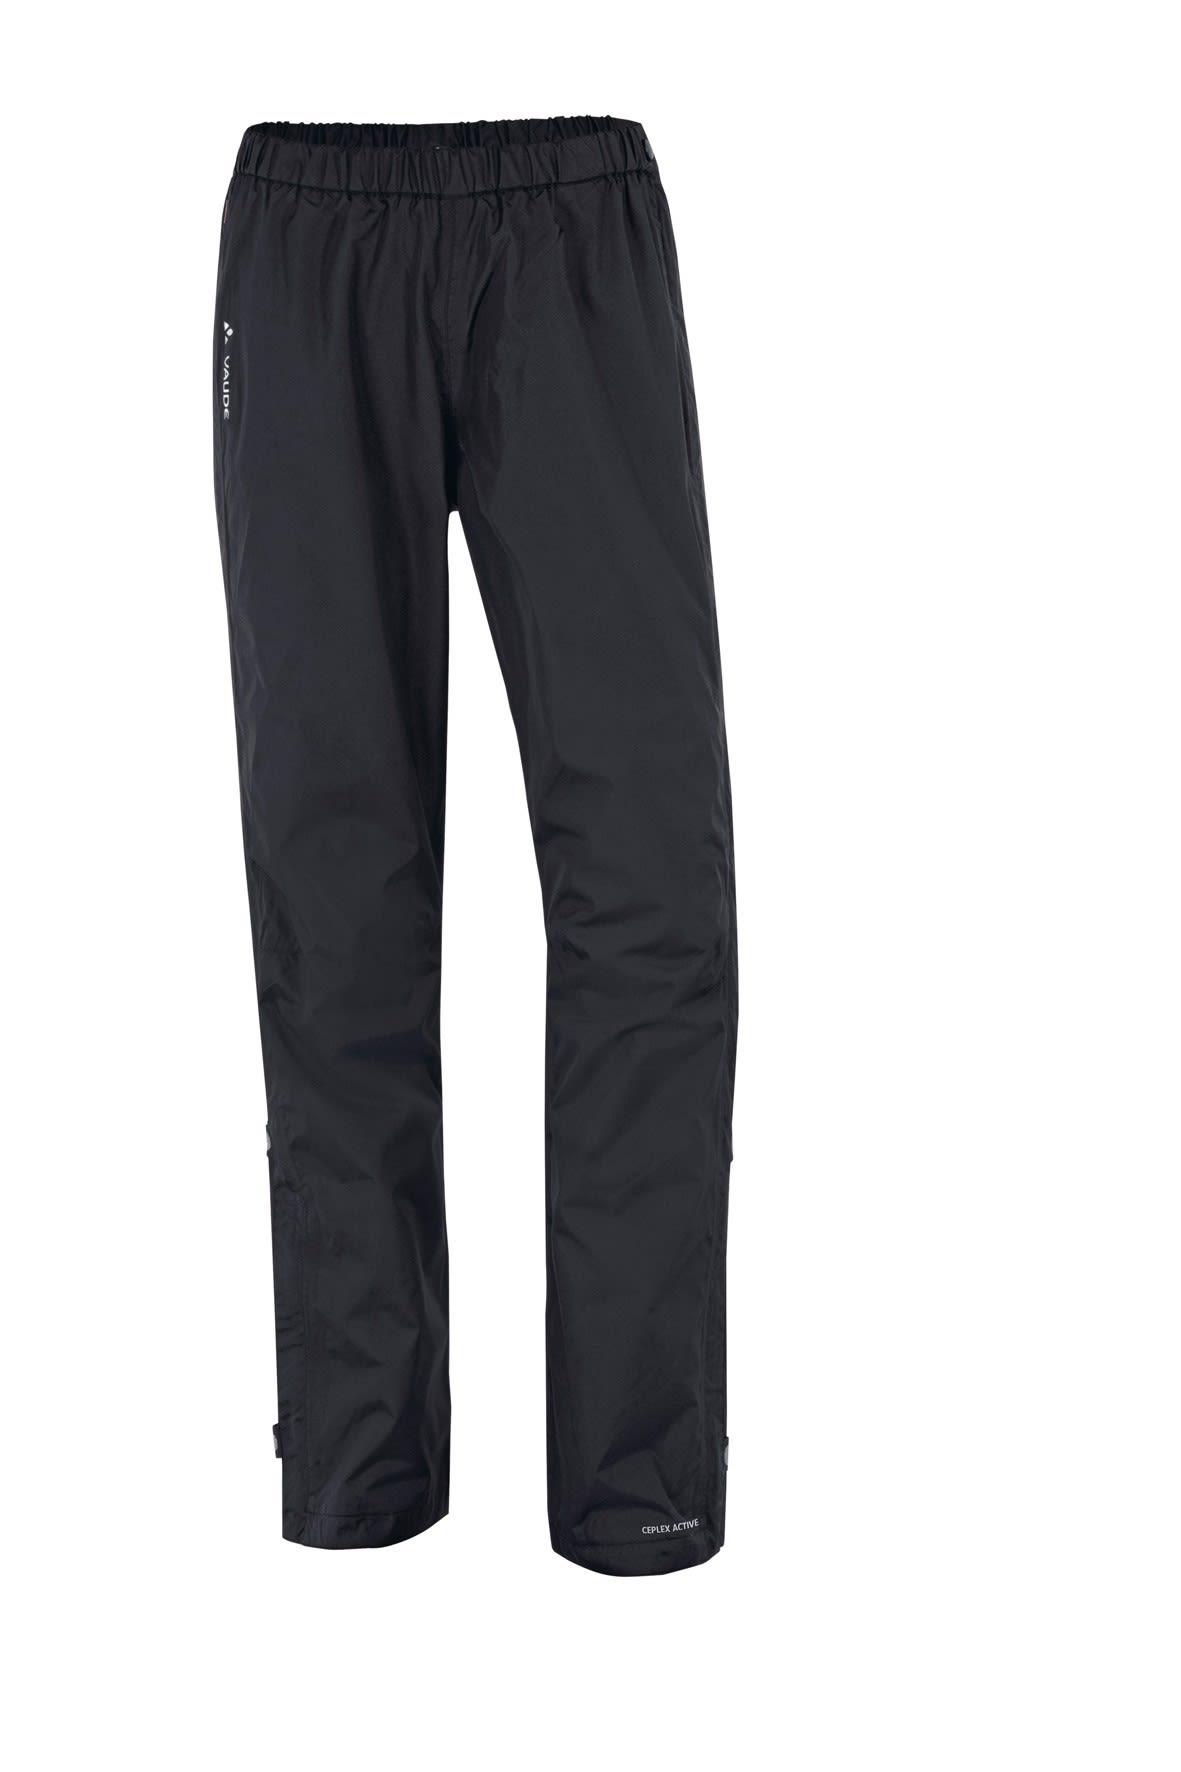 Vaude Fluid Full-Zip Pants Schwarz- Female Hosen- Grsse 38 - Short - Farbe Black unter Vaude